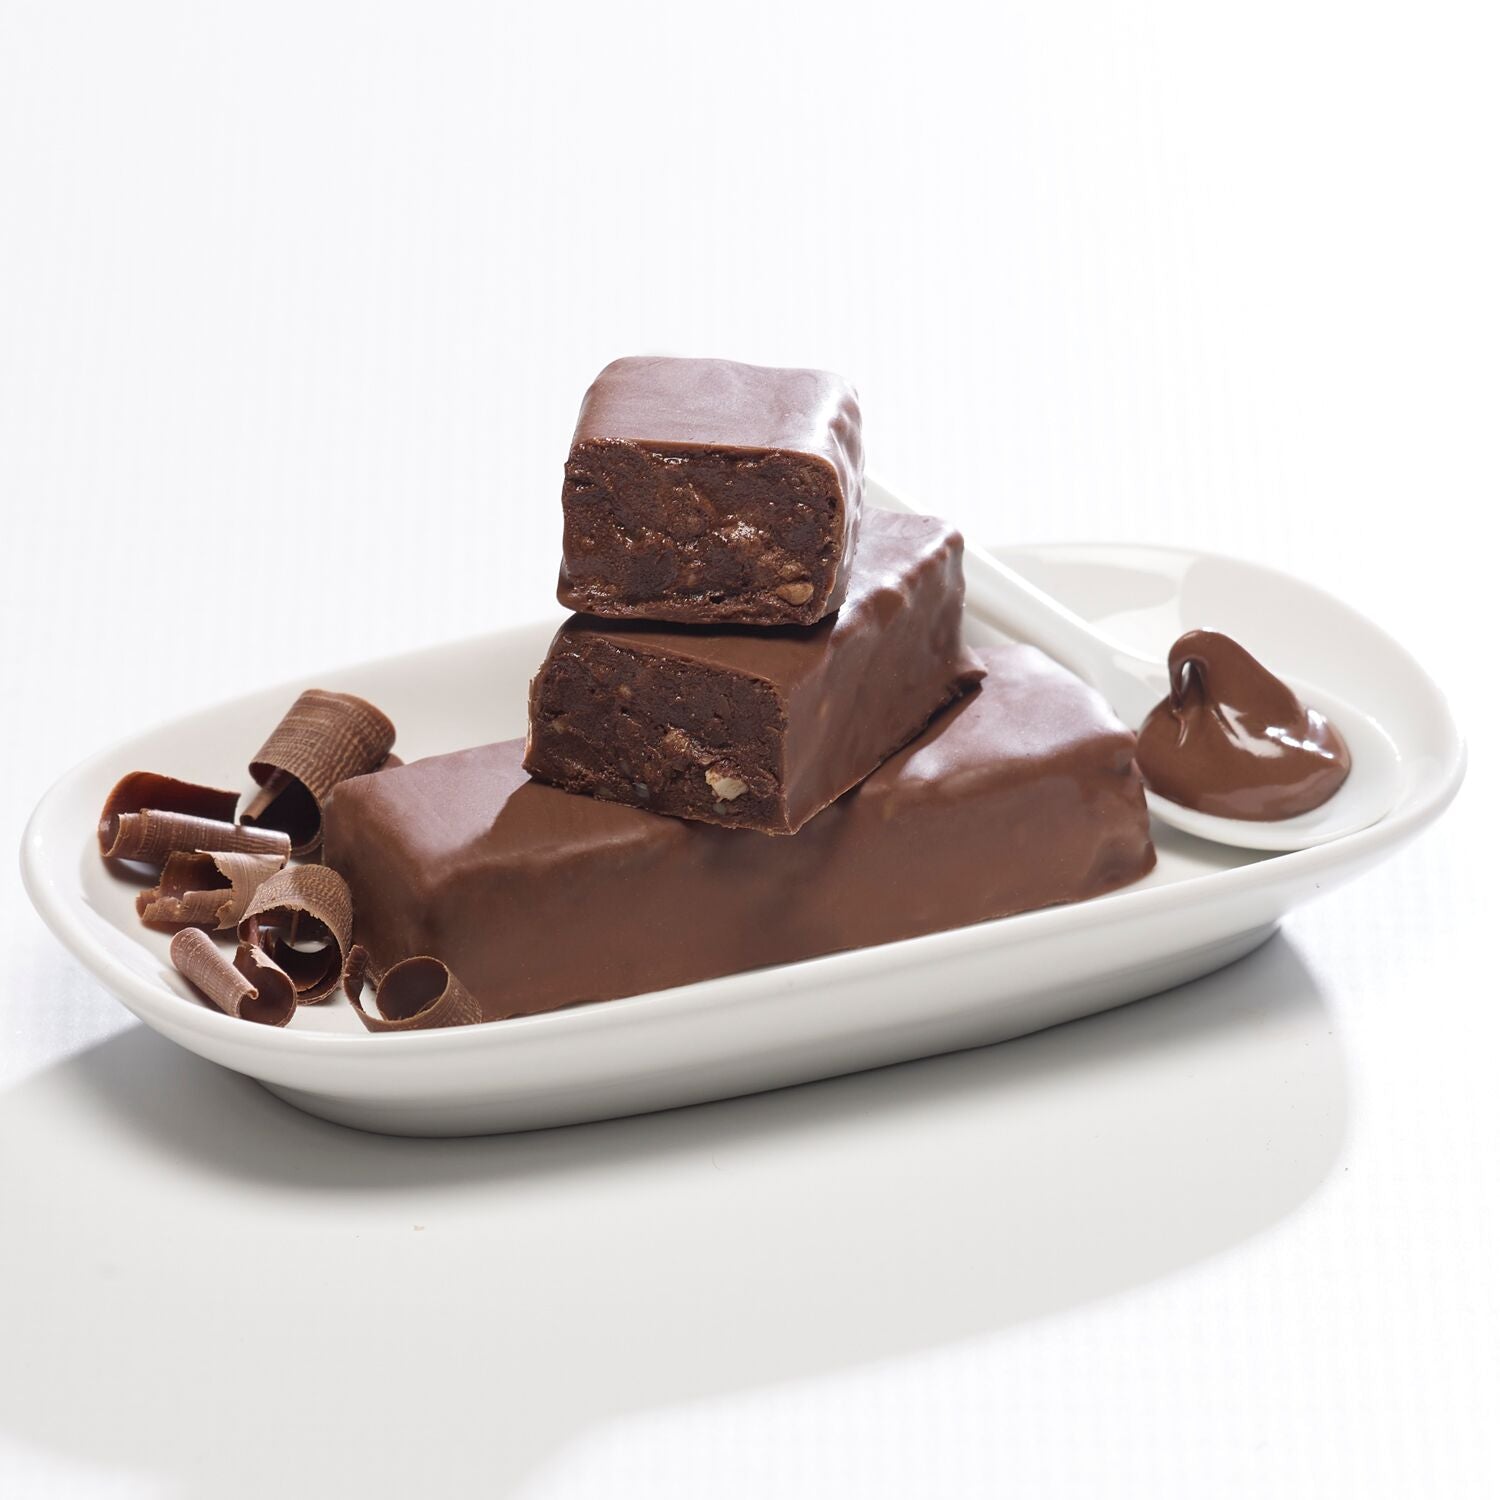 Chocolate Creme Keto Bars on white plate